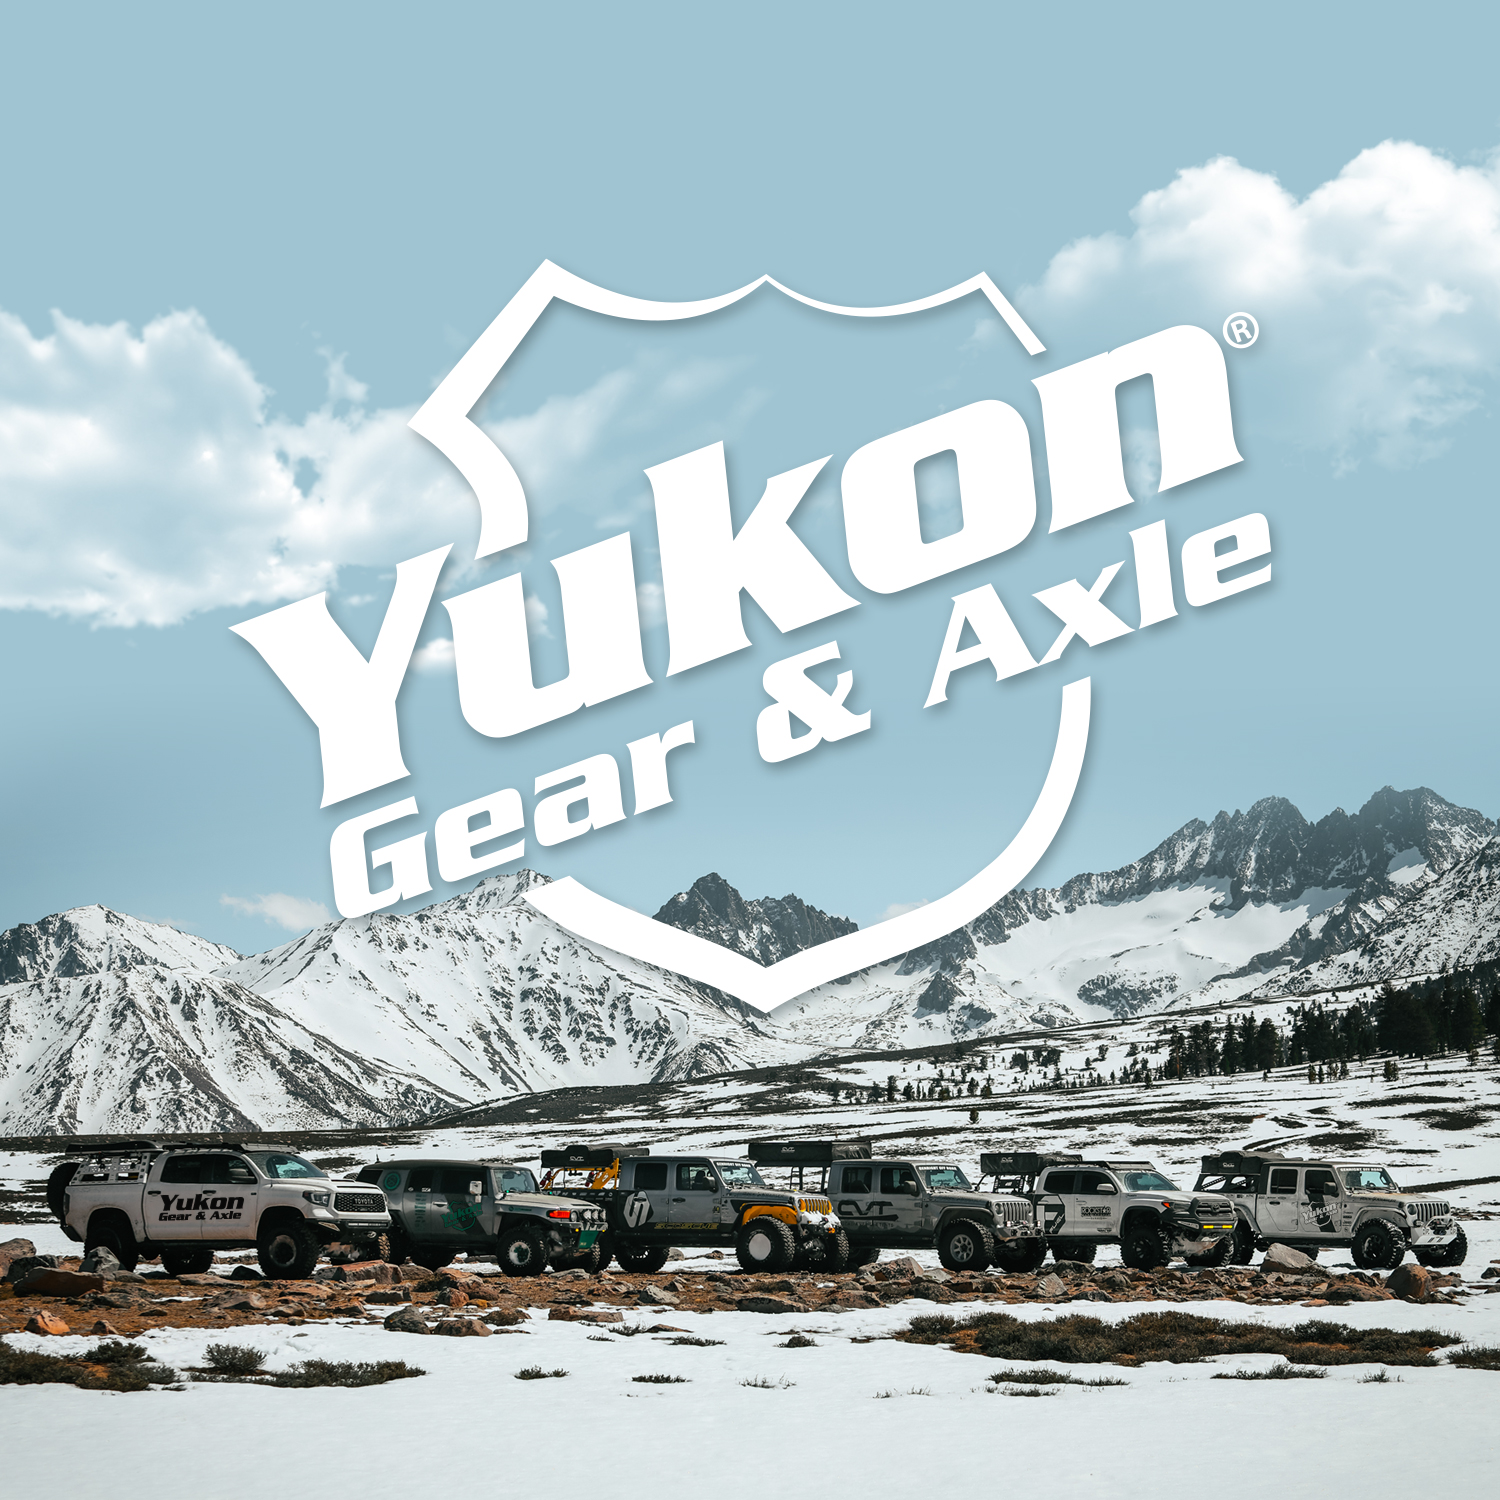 Yukon high performance replacement ring & pinion gear set, Dana 80, 4.63 ratio 